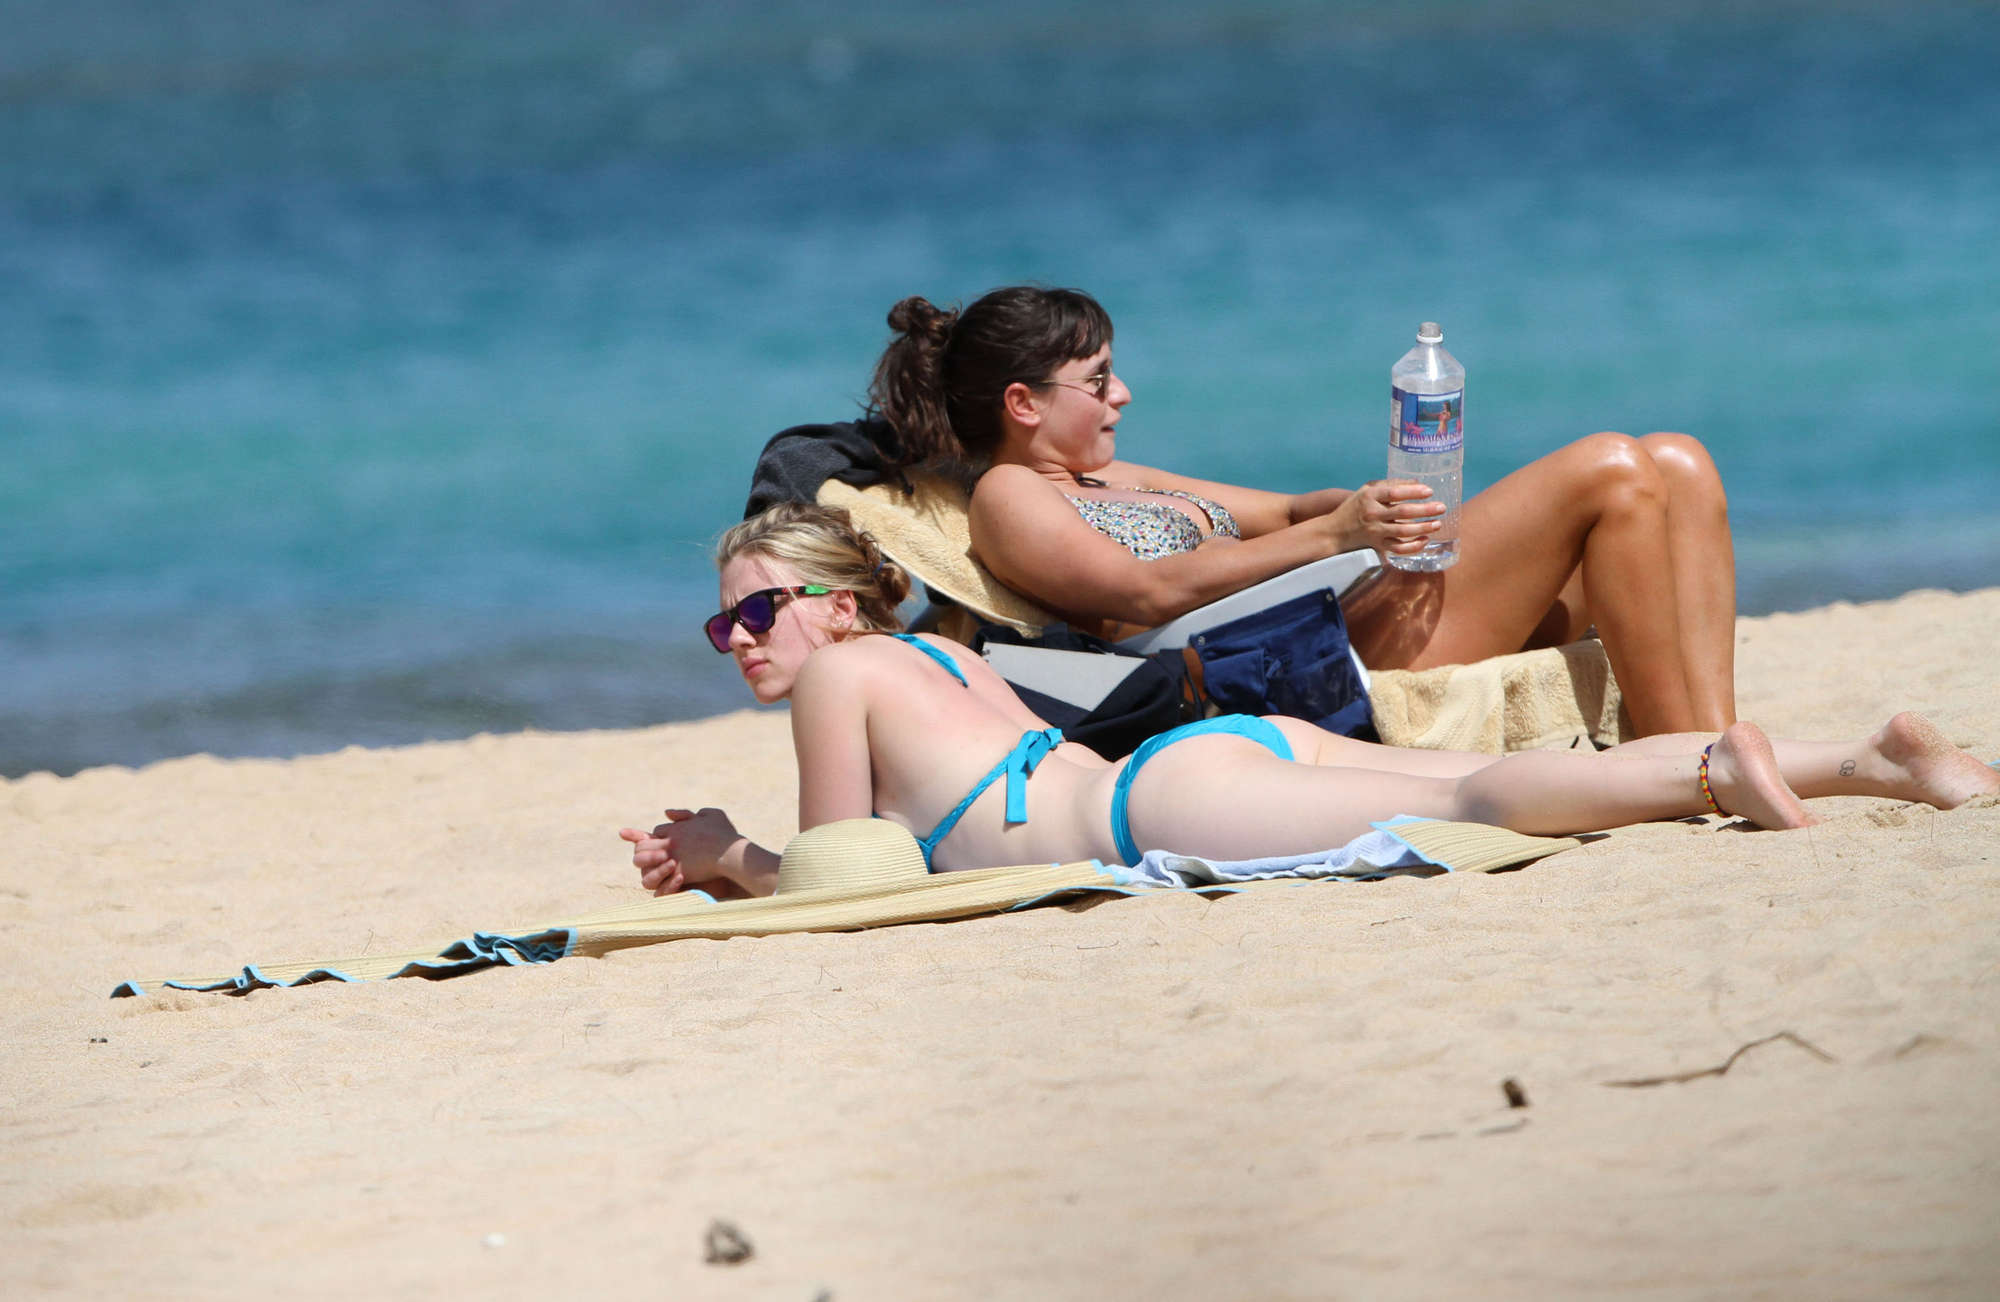 Scarlet Johansson 2012 : Scarlett Johansson Bikini pics from Hawaii 2012-.....